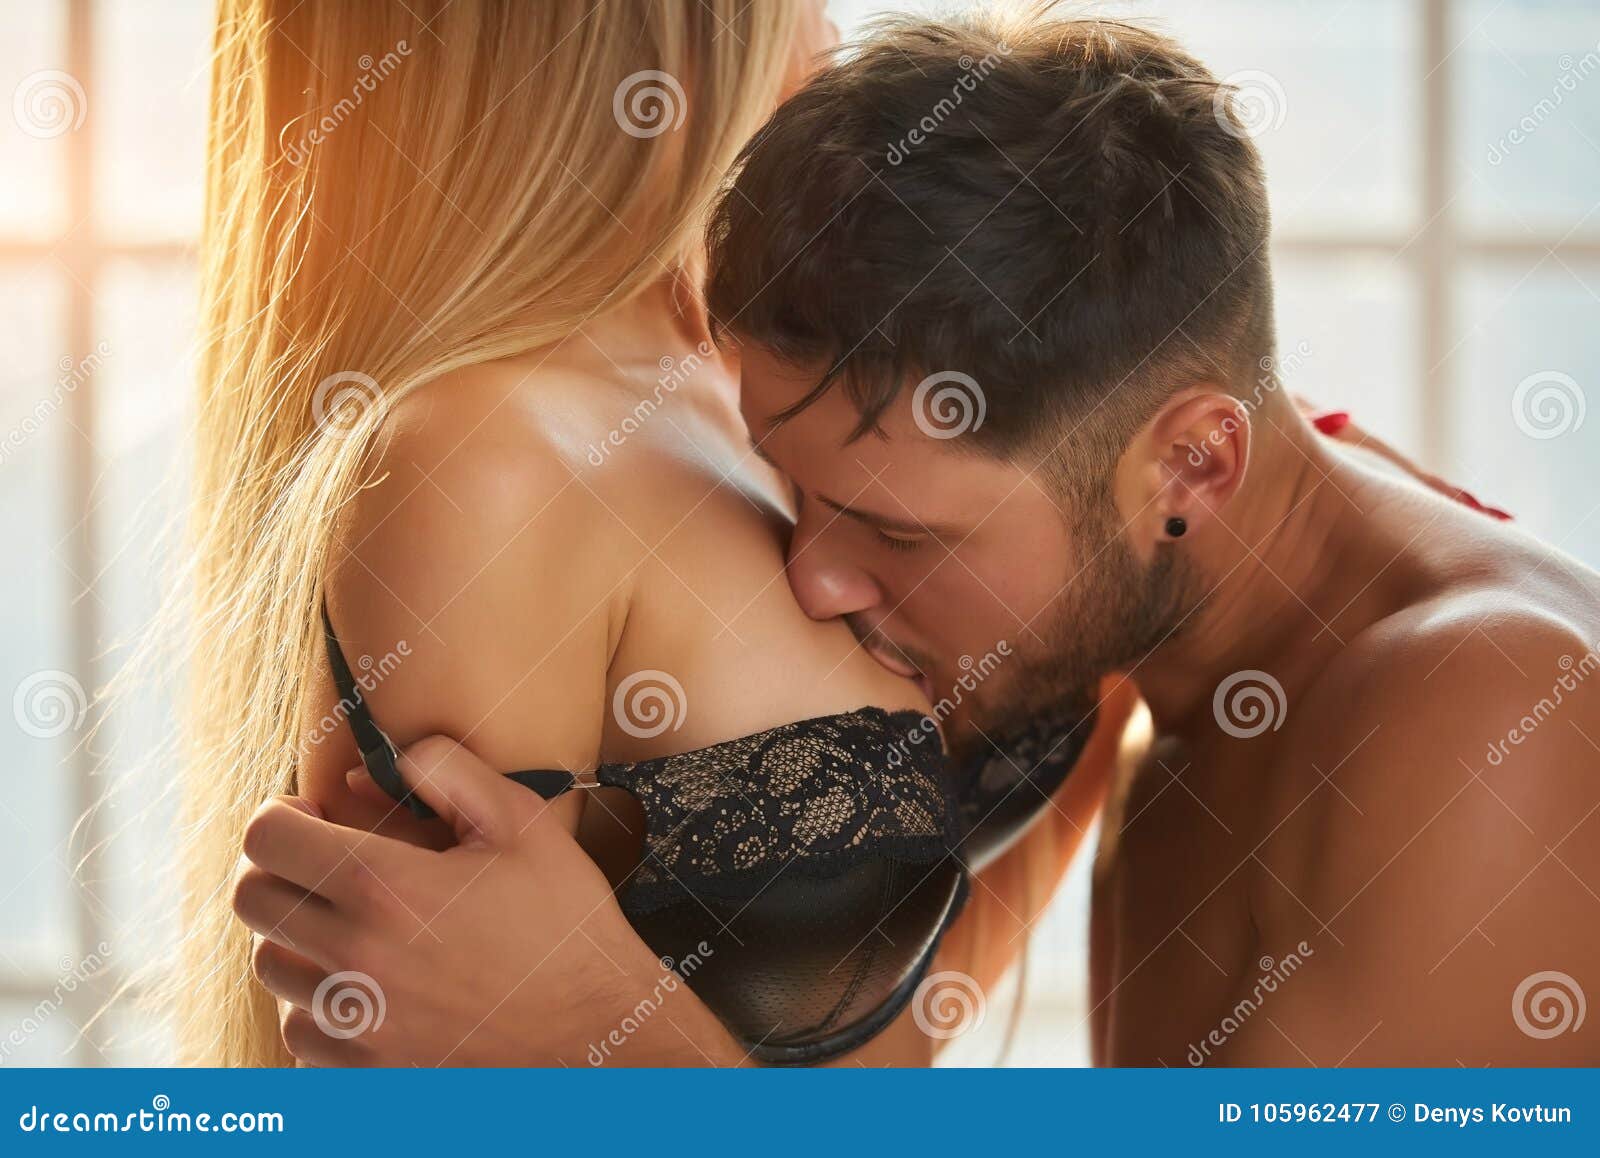 fellatio master hottest sex videos search watch Boattrip, Twogirls